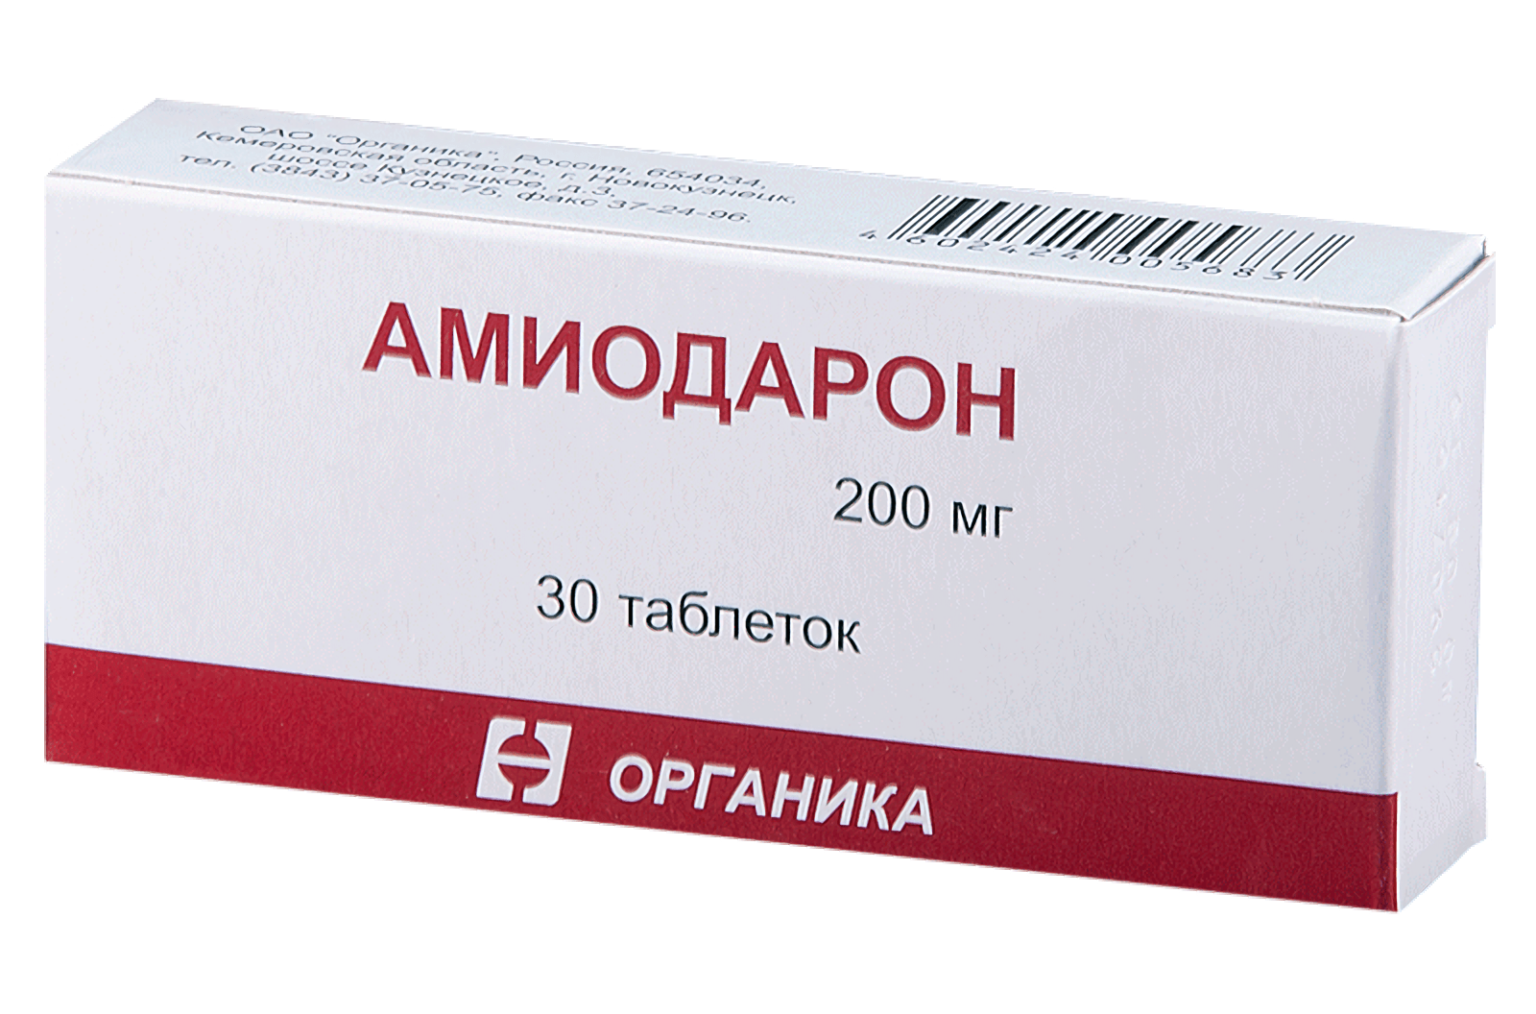 Какие лекарства от аритмии. Амиодарон 200 препараты. Лекарство от аритмии. Амиодарон Озон. Амиодарон органика.